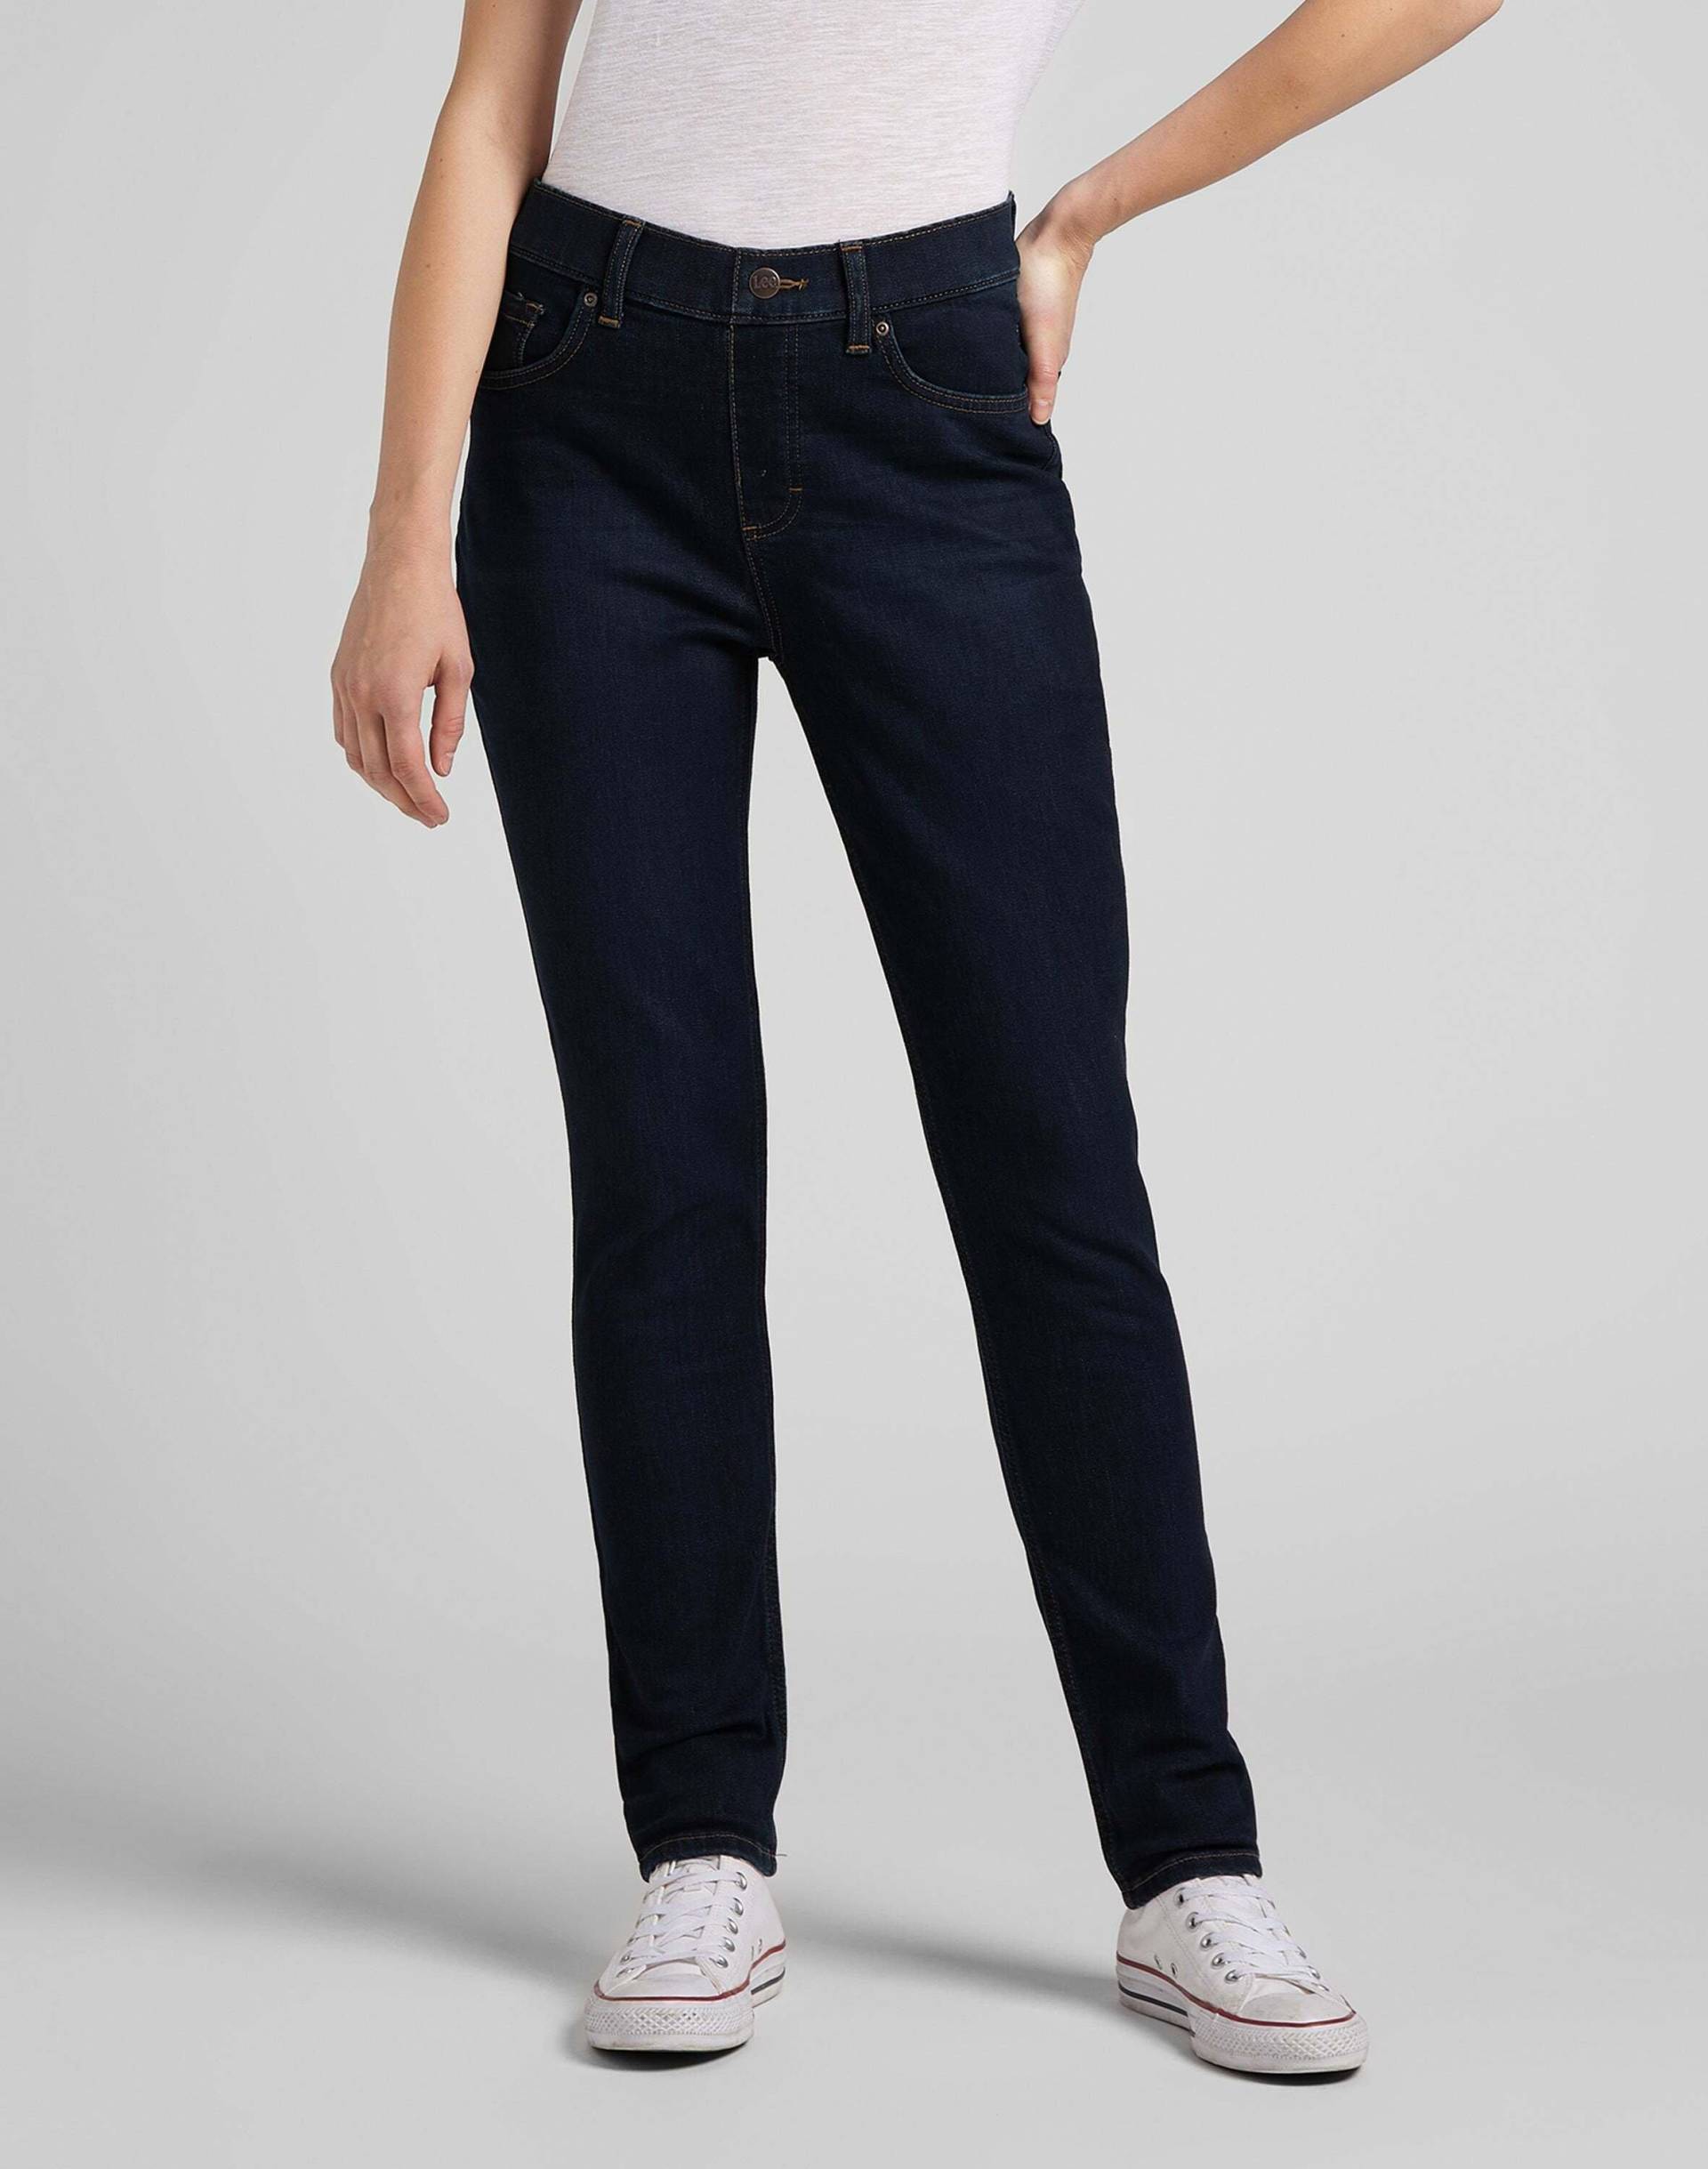 Jeans Skinny Fit Comfort Damen Marine L31/W28 von Lee